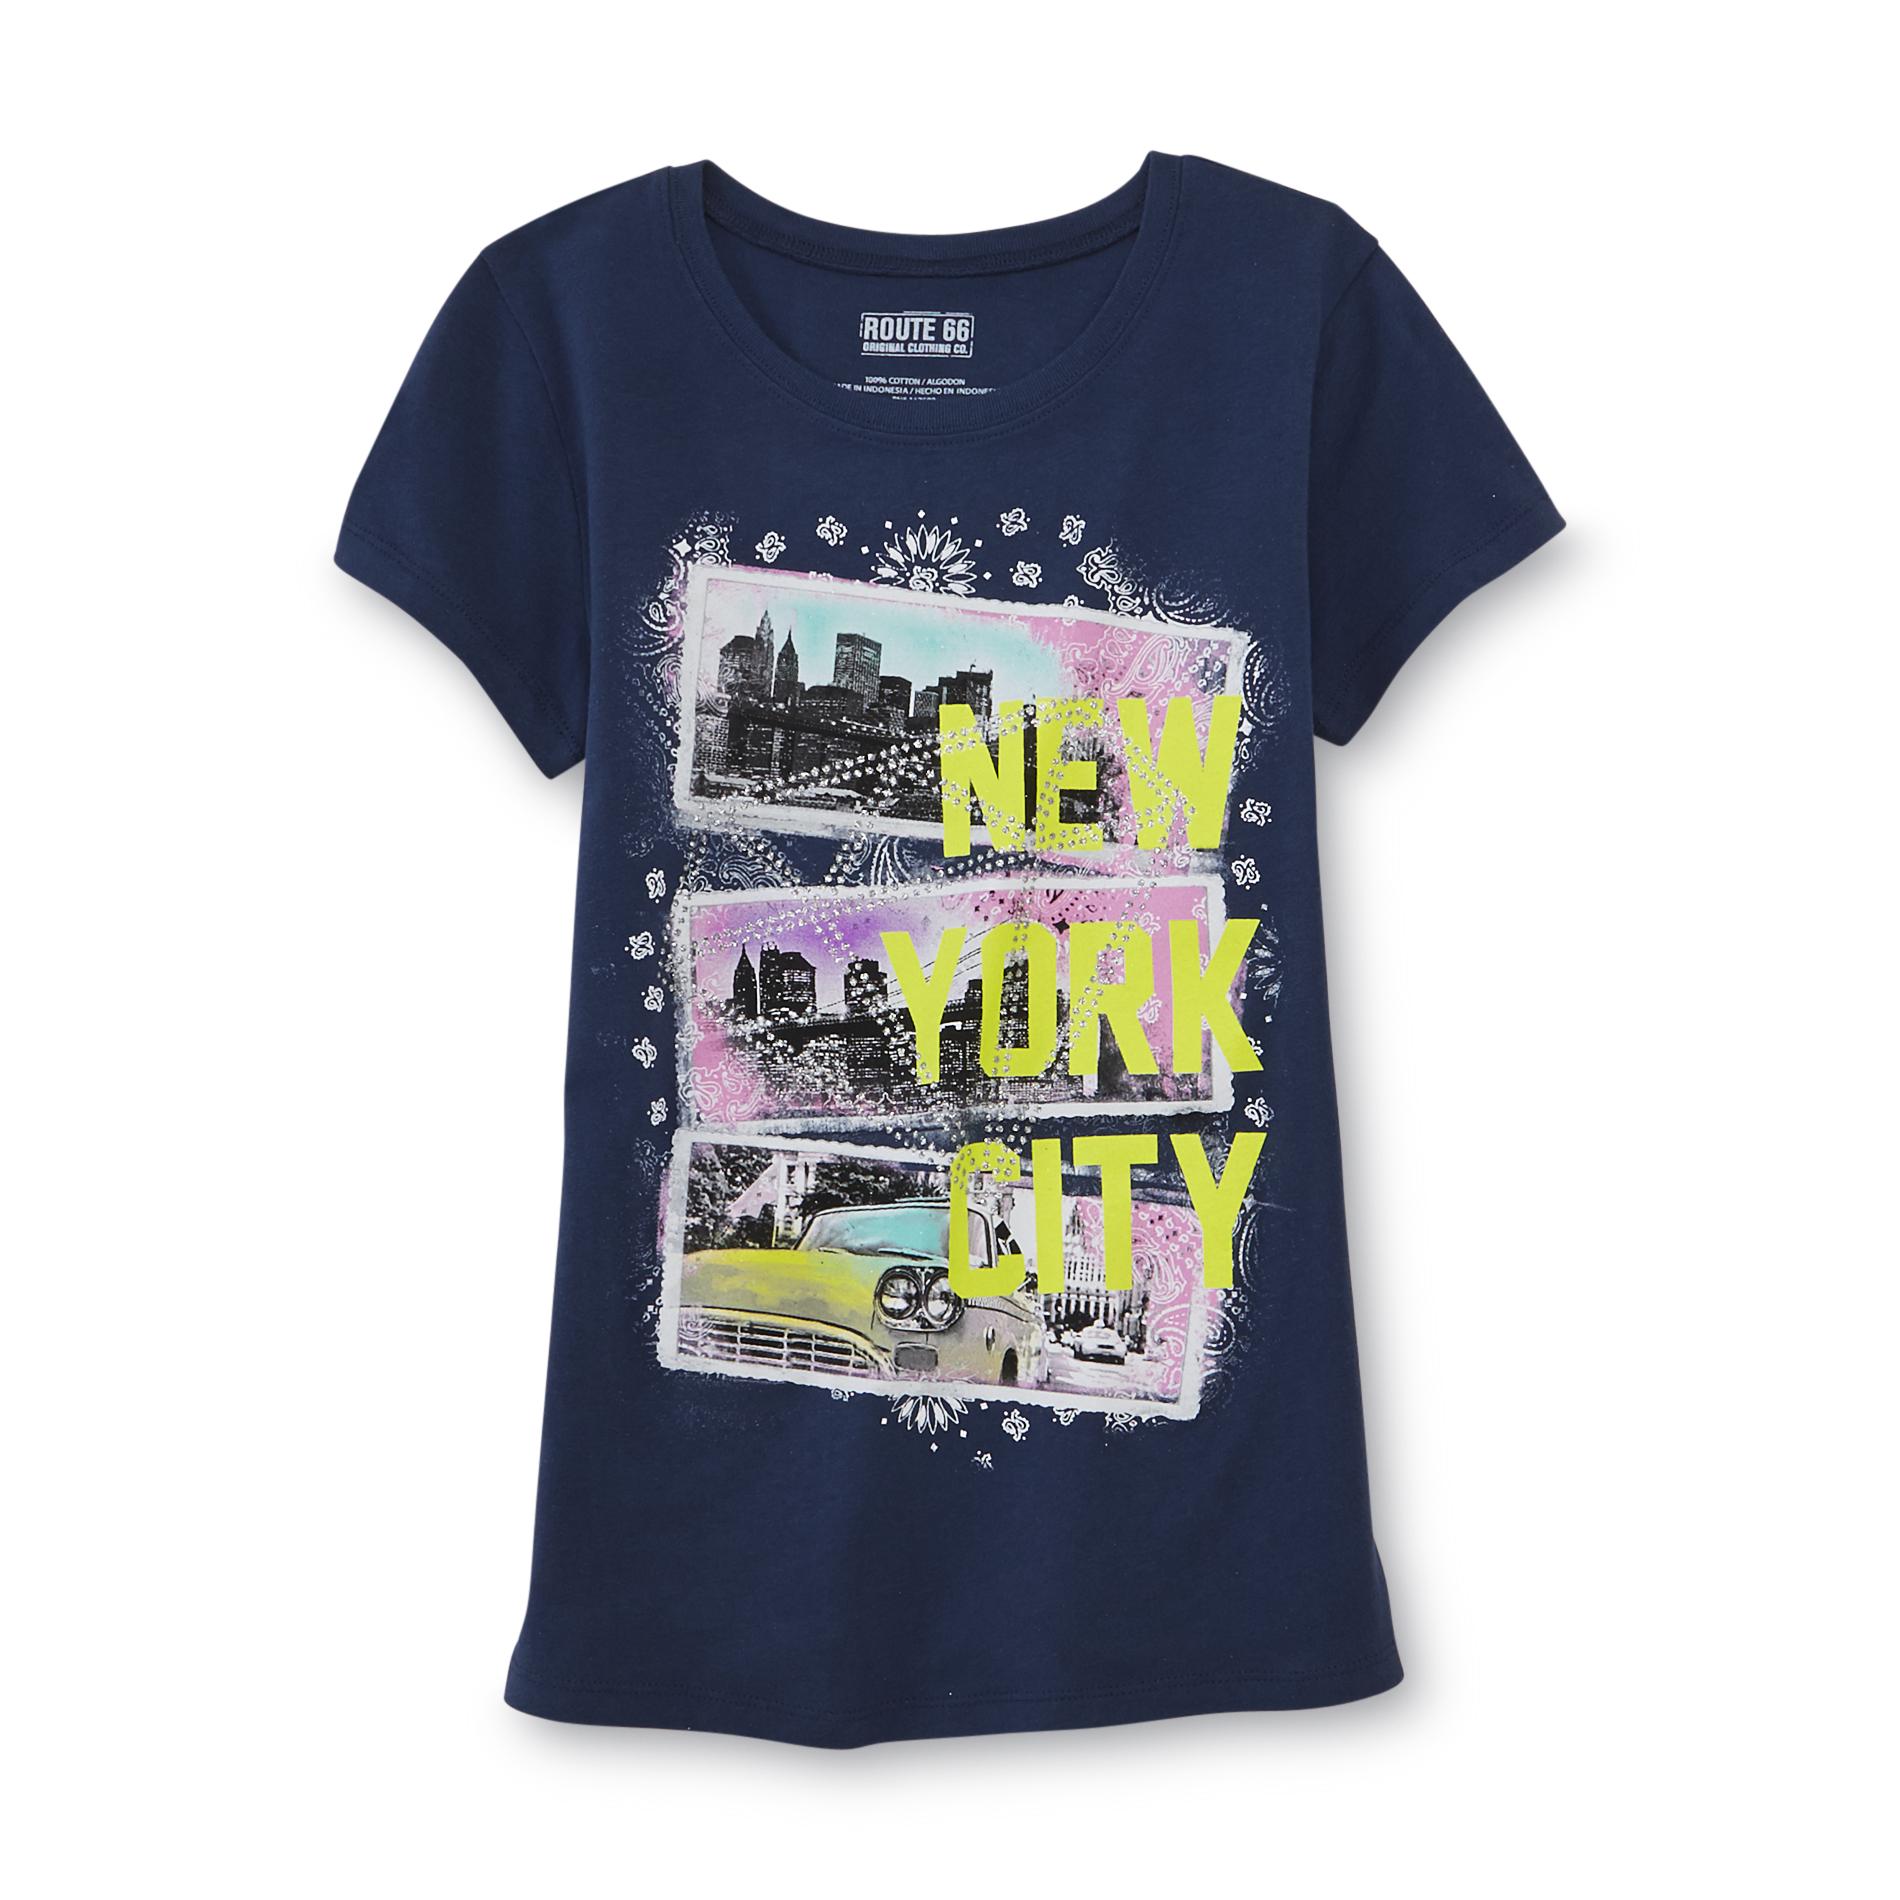 Route 66 Girl's Glitter Graphic T-Shirt - New York City